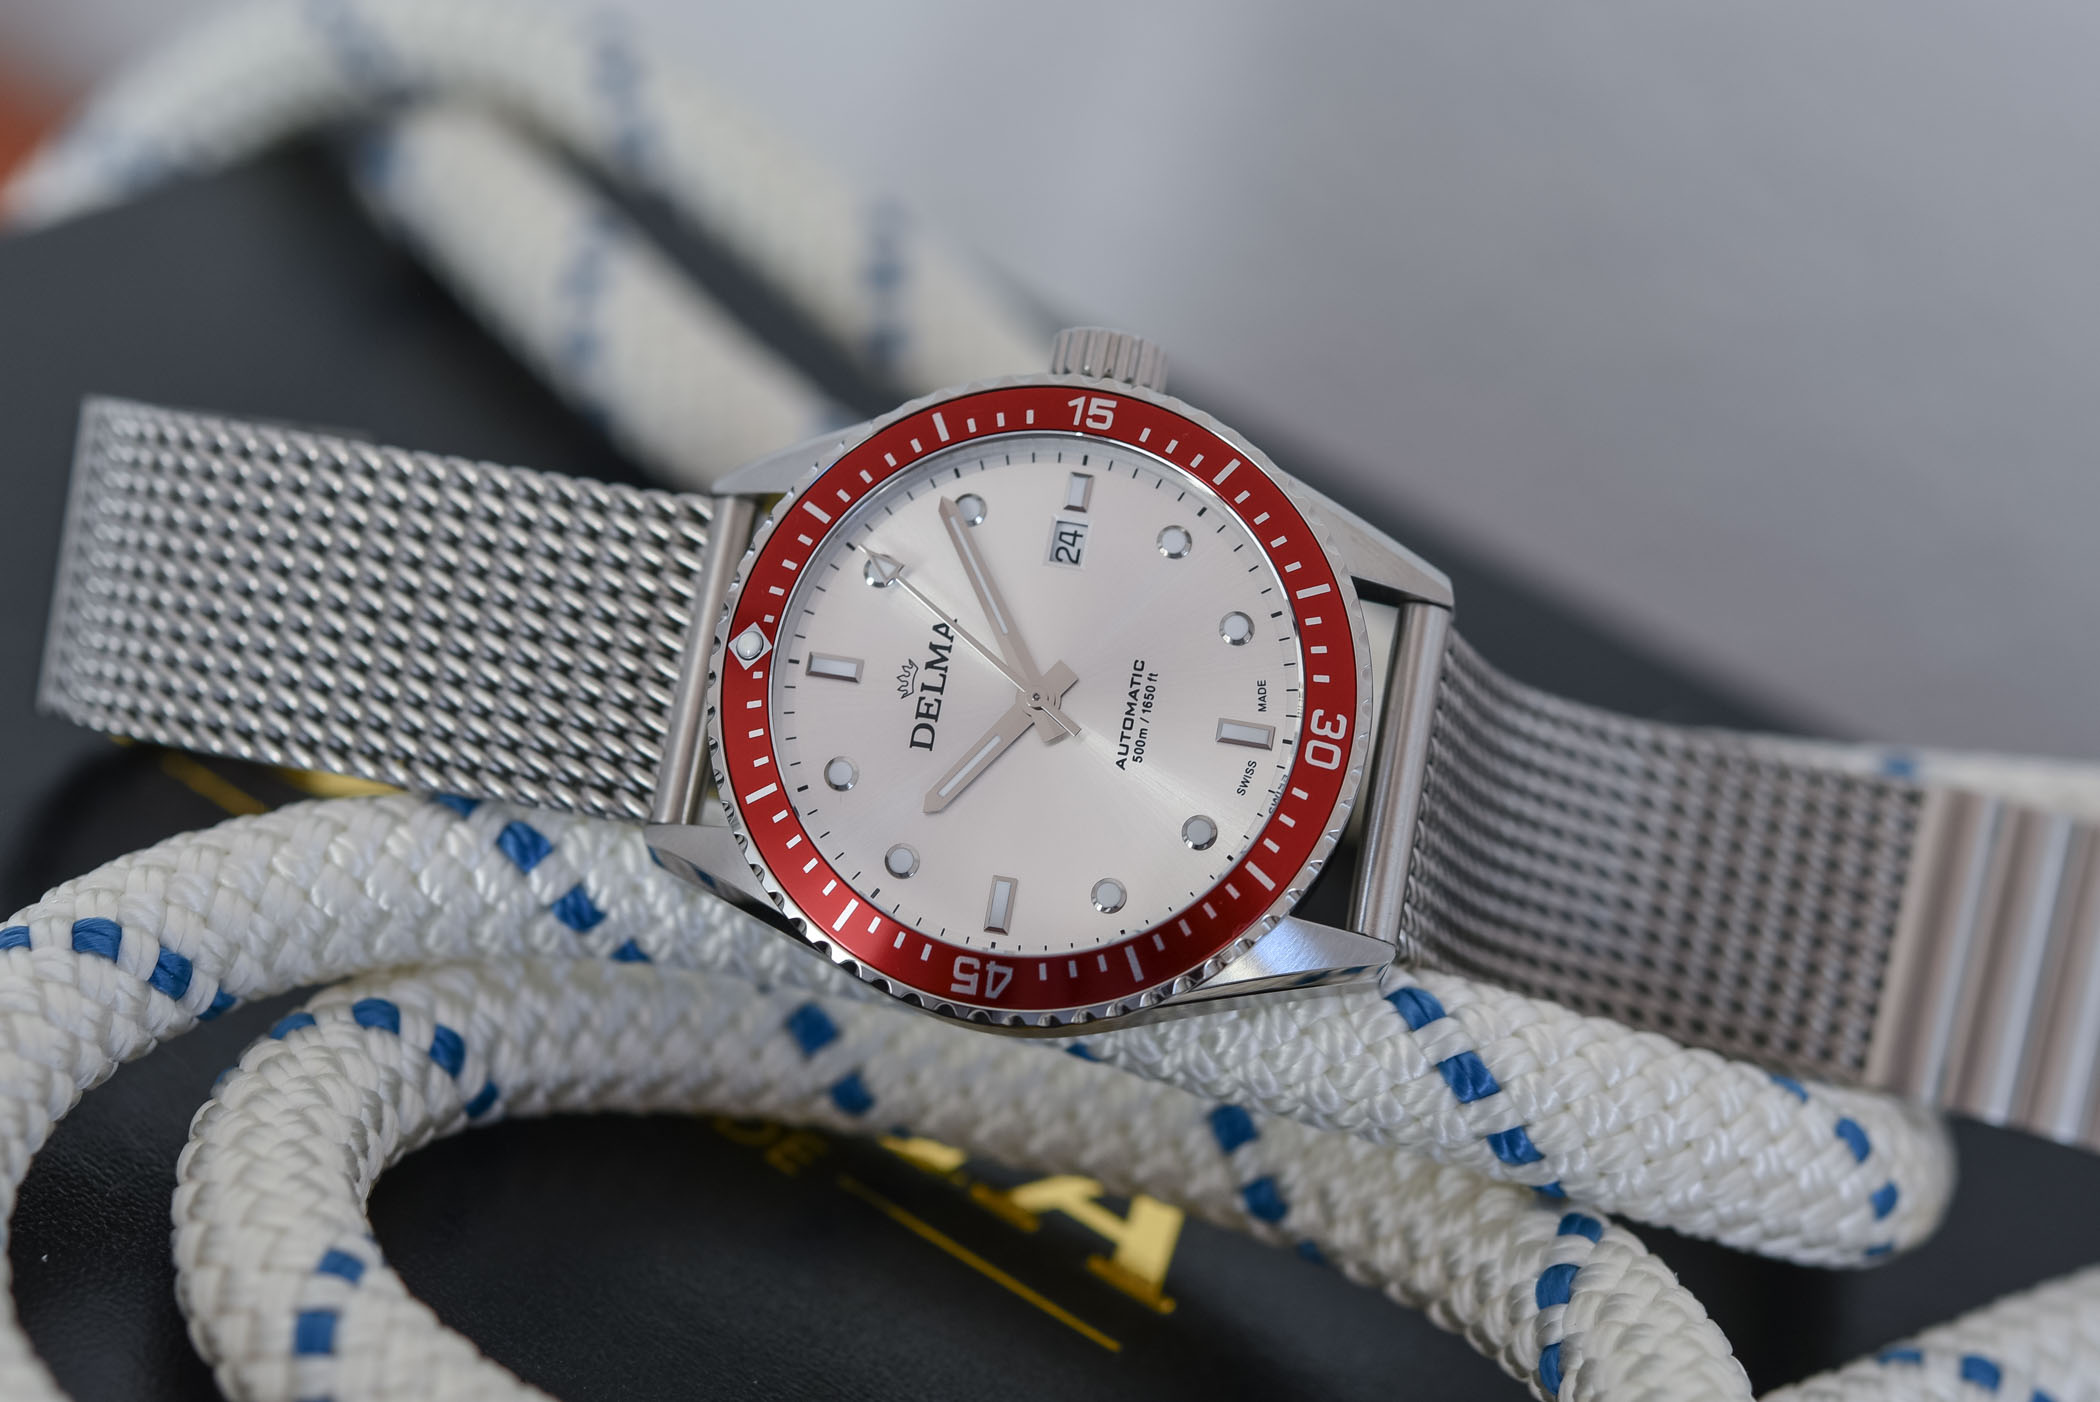 Delma Cayman Automatic Dive Watch - Value Proposition